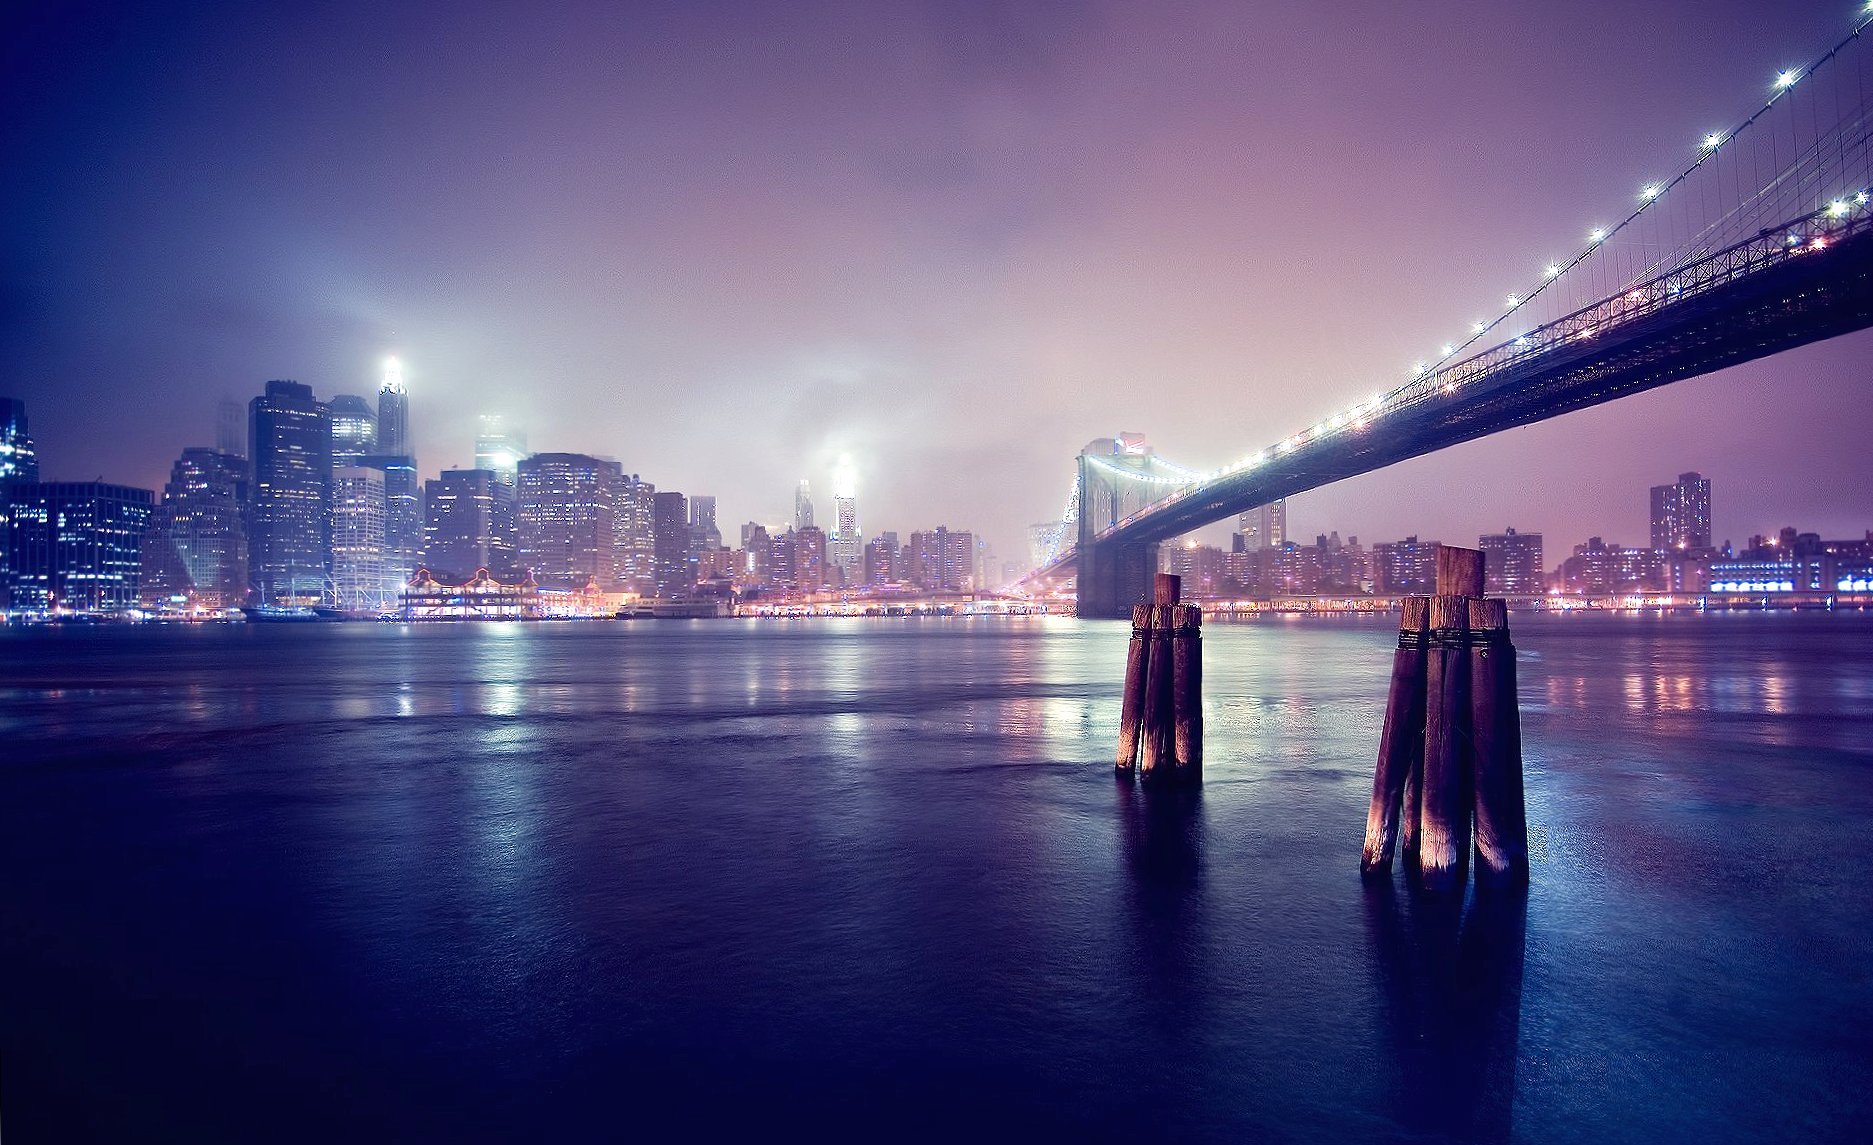 Night brooklyn bridge new york at 1334 x 750 iPhone 7 size wallpapers HD quality